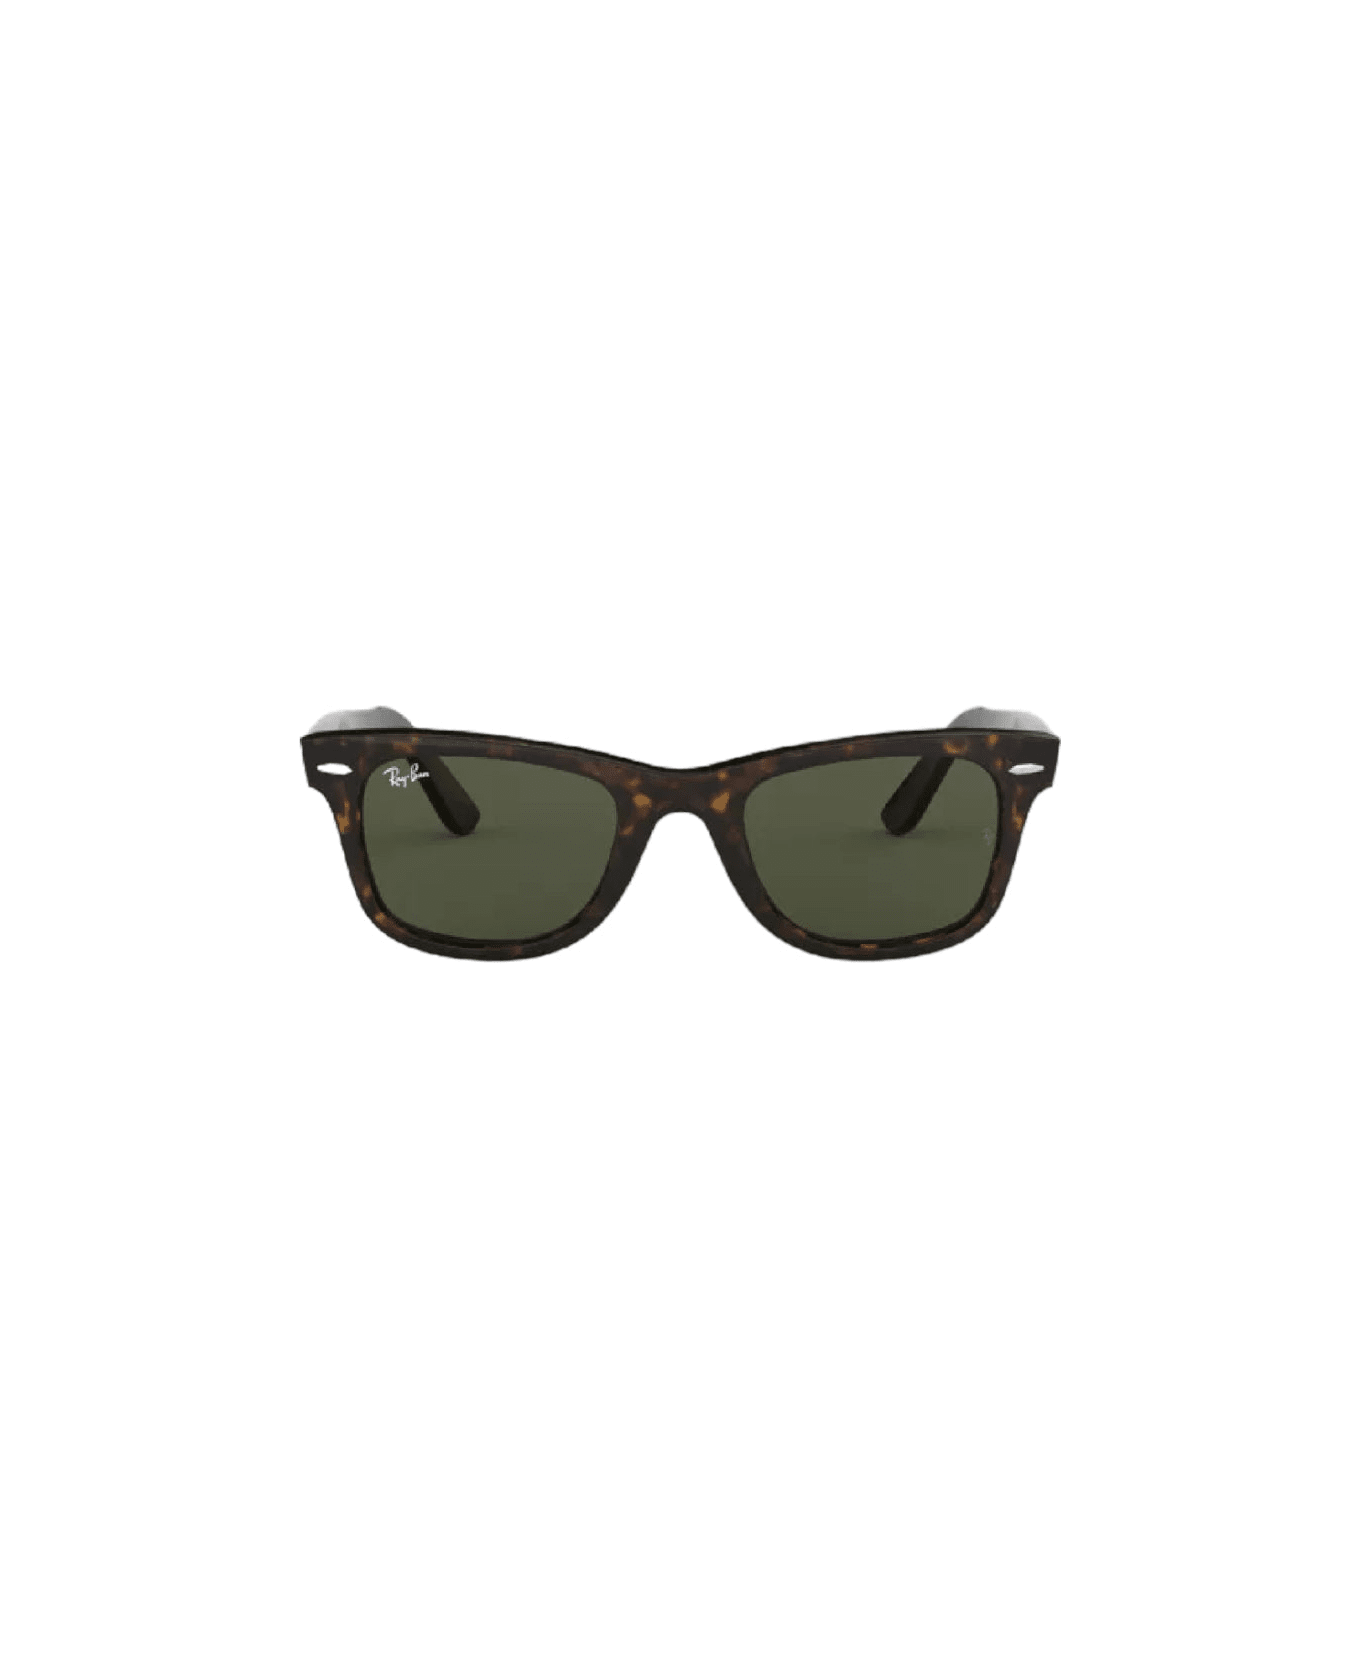 Ray-Ban Rb 2140 Tranparent Sunglasses